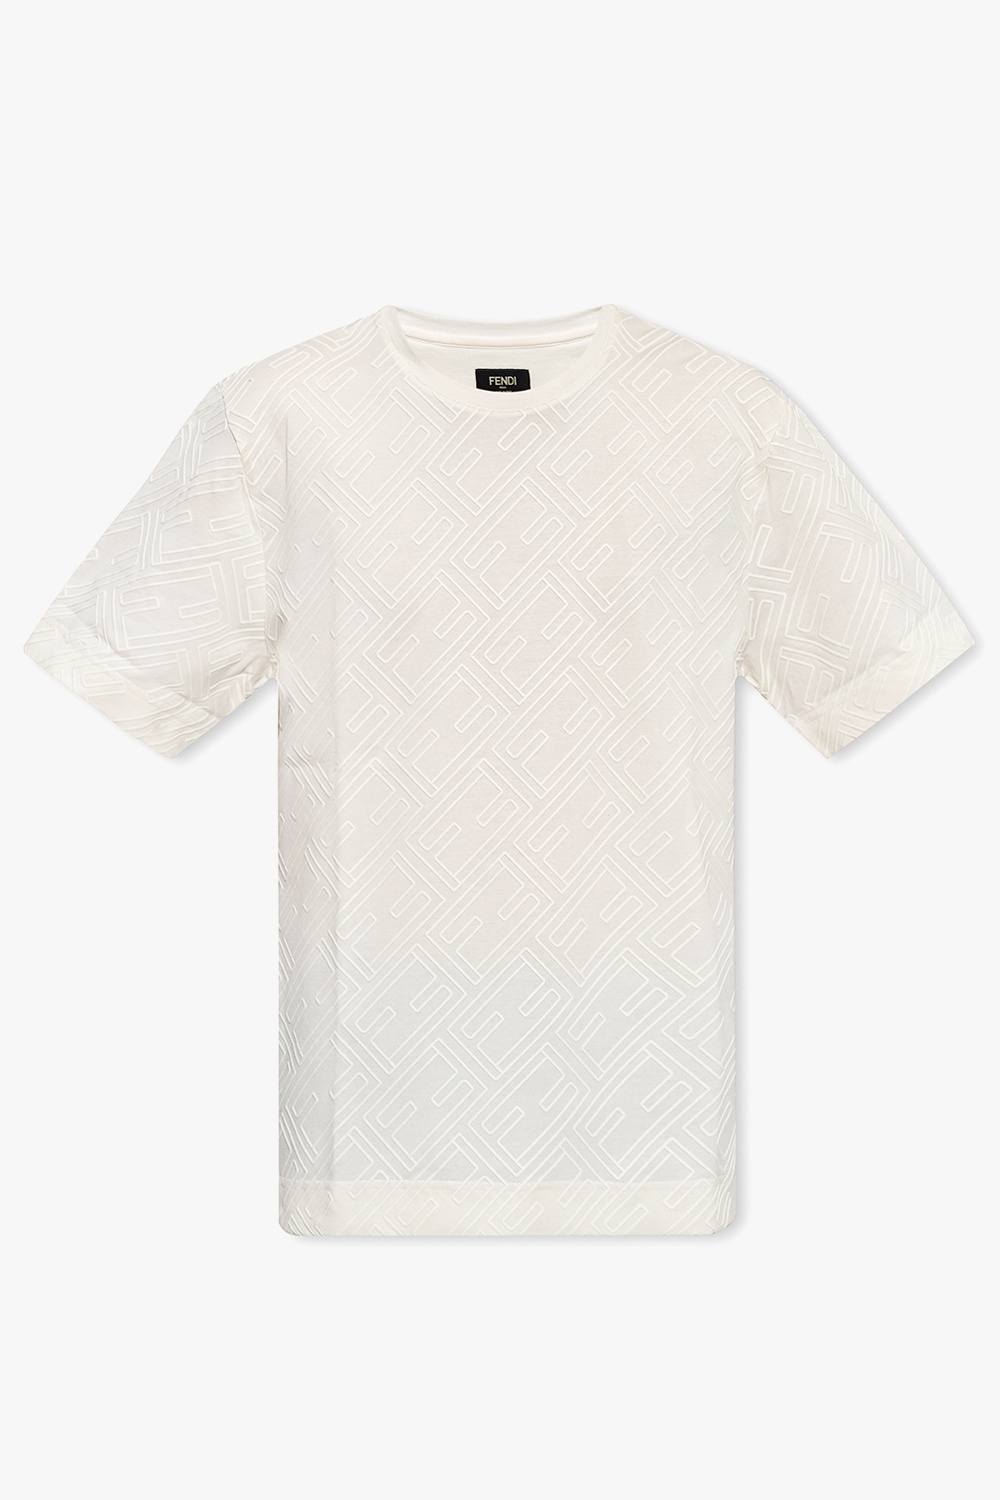 Louis Vuitton Toweling T-Shirt